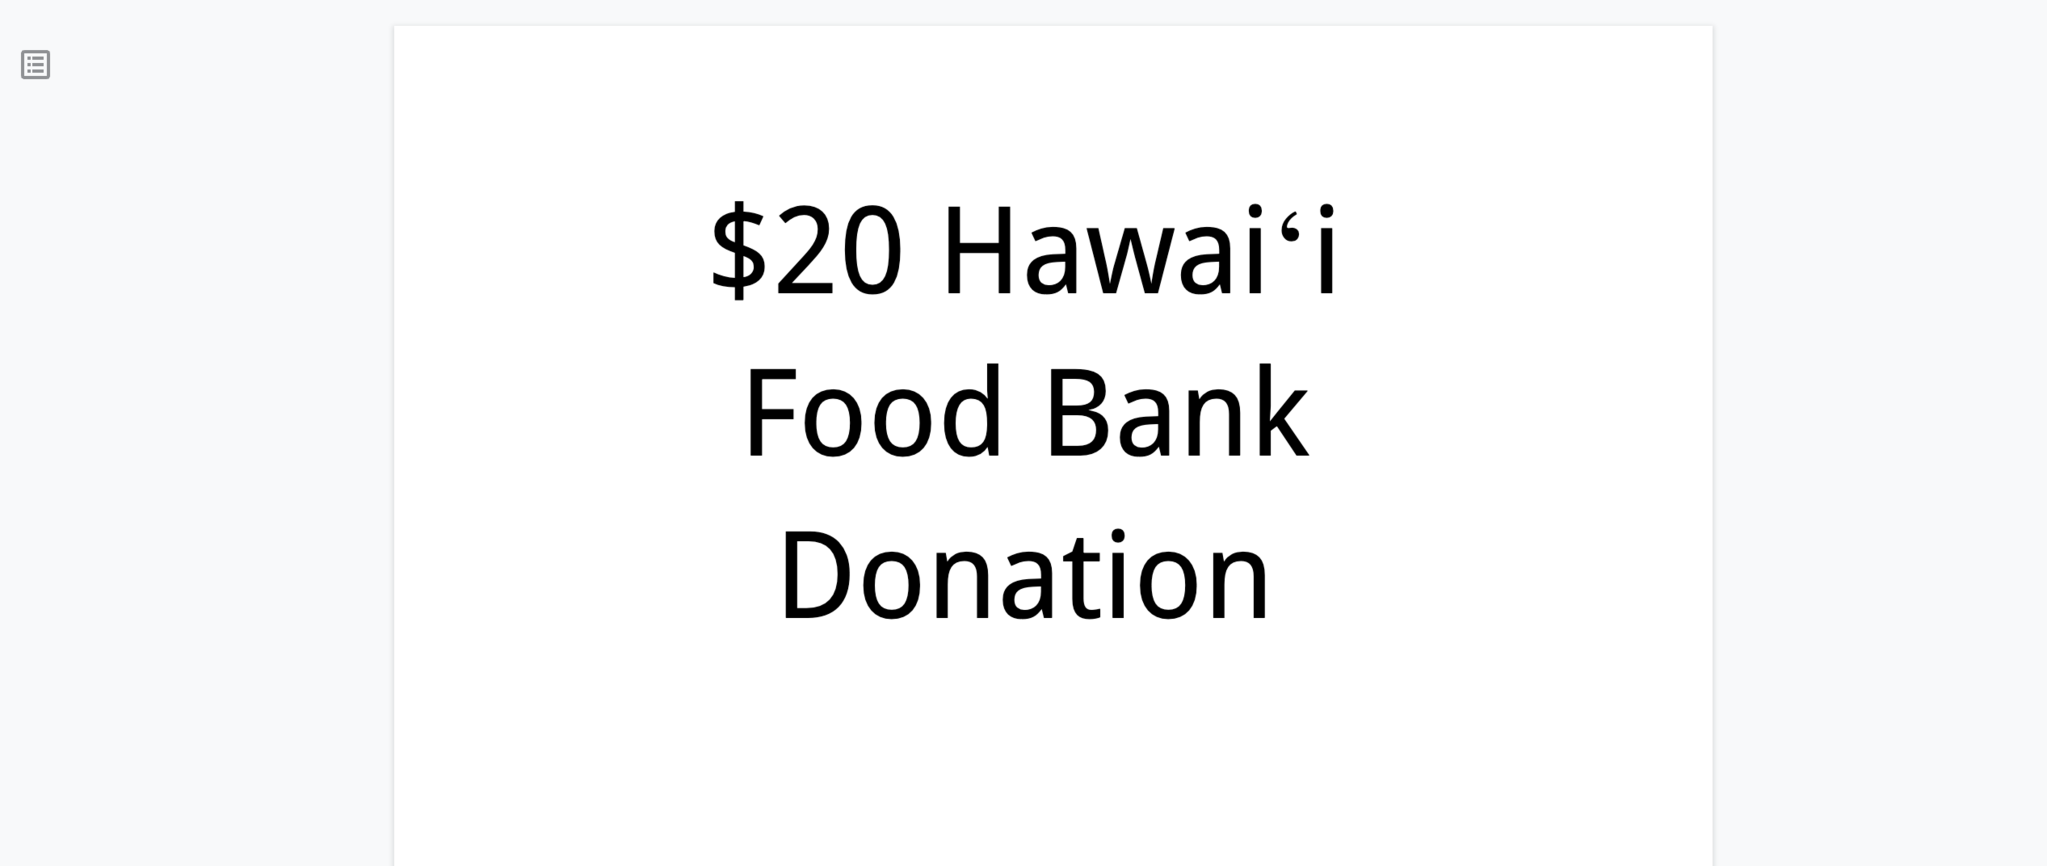 Hawaii Food Bank 20 Donation NIU Mobility